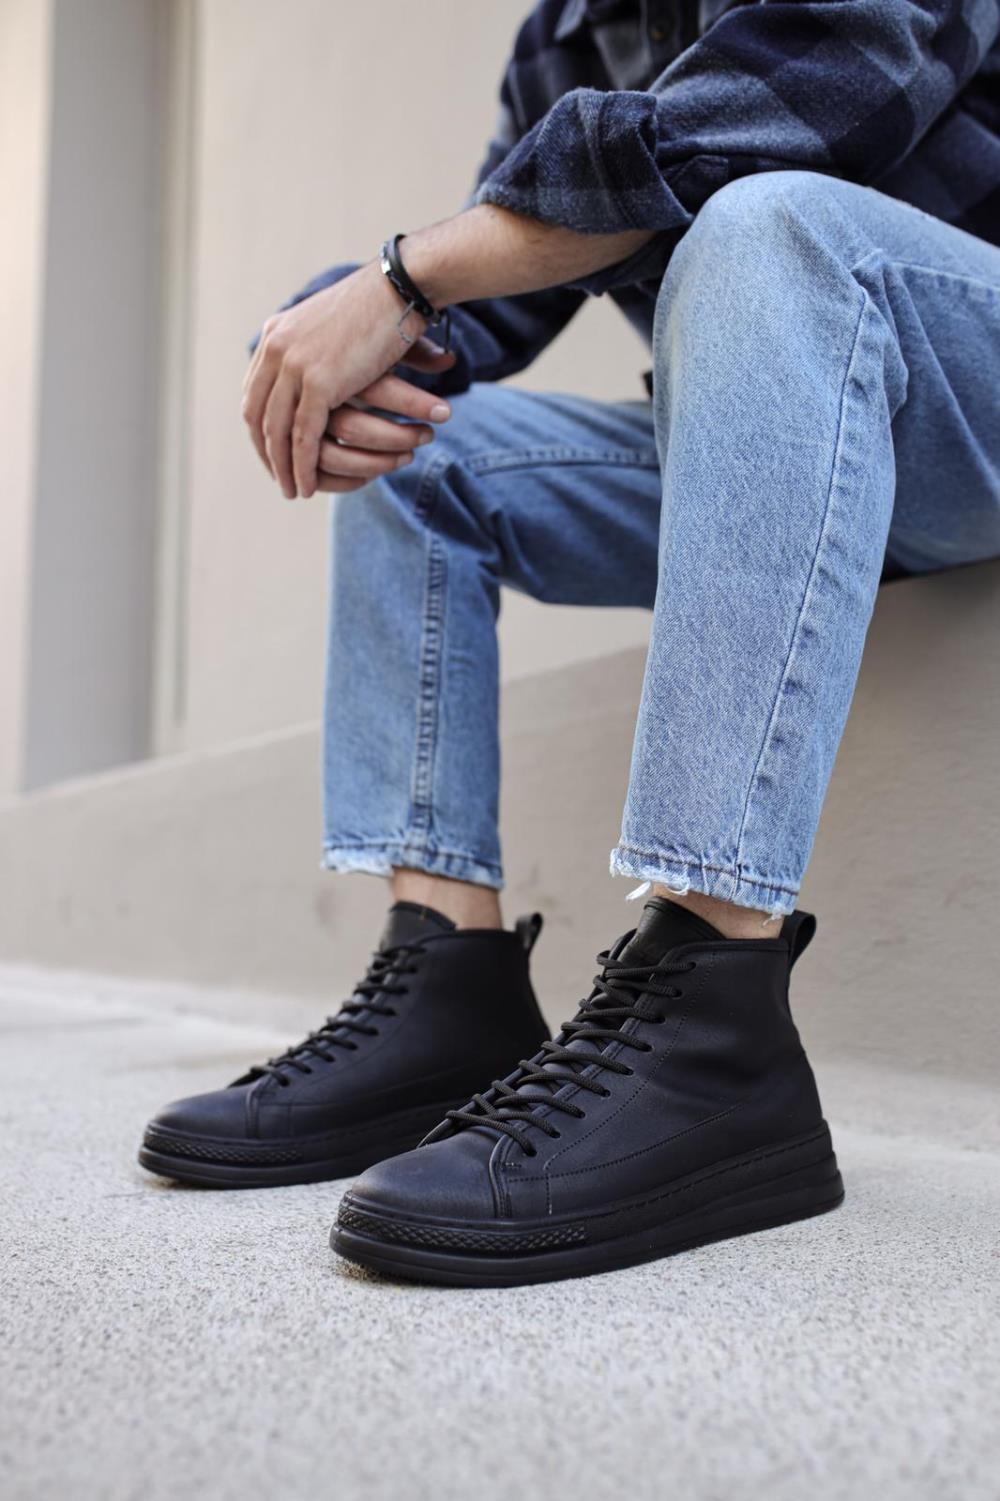 High-Sole Shoes C-030 Black (Black Sole) - STREET MODE ™